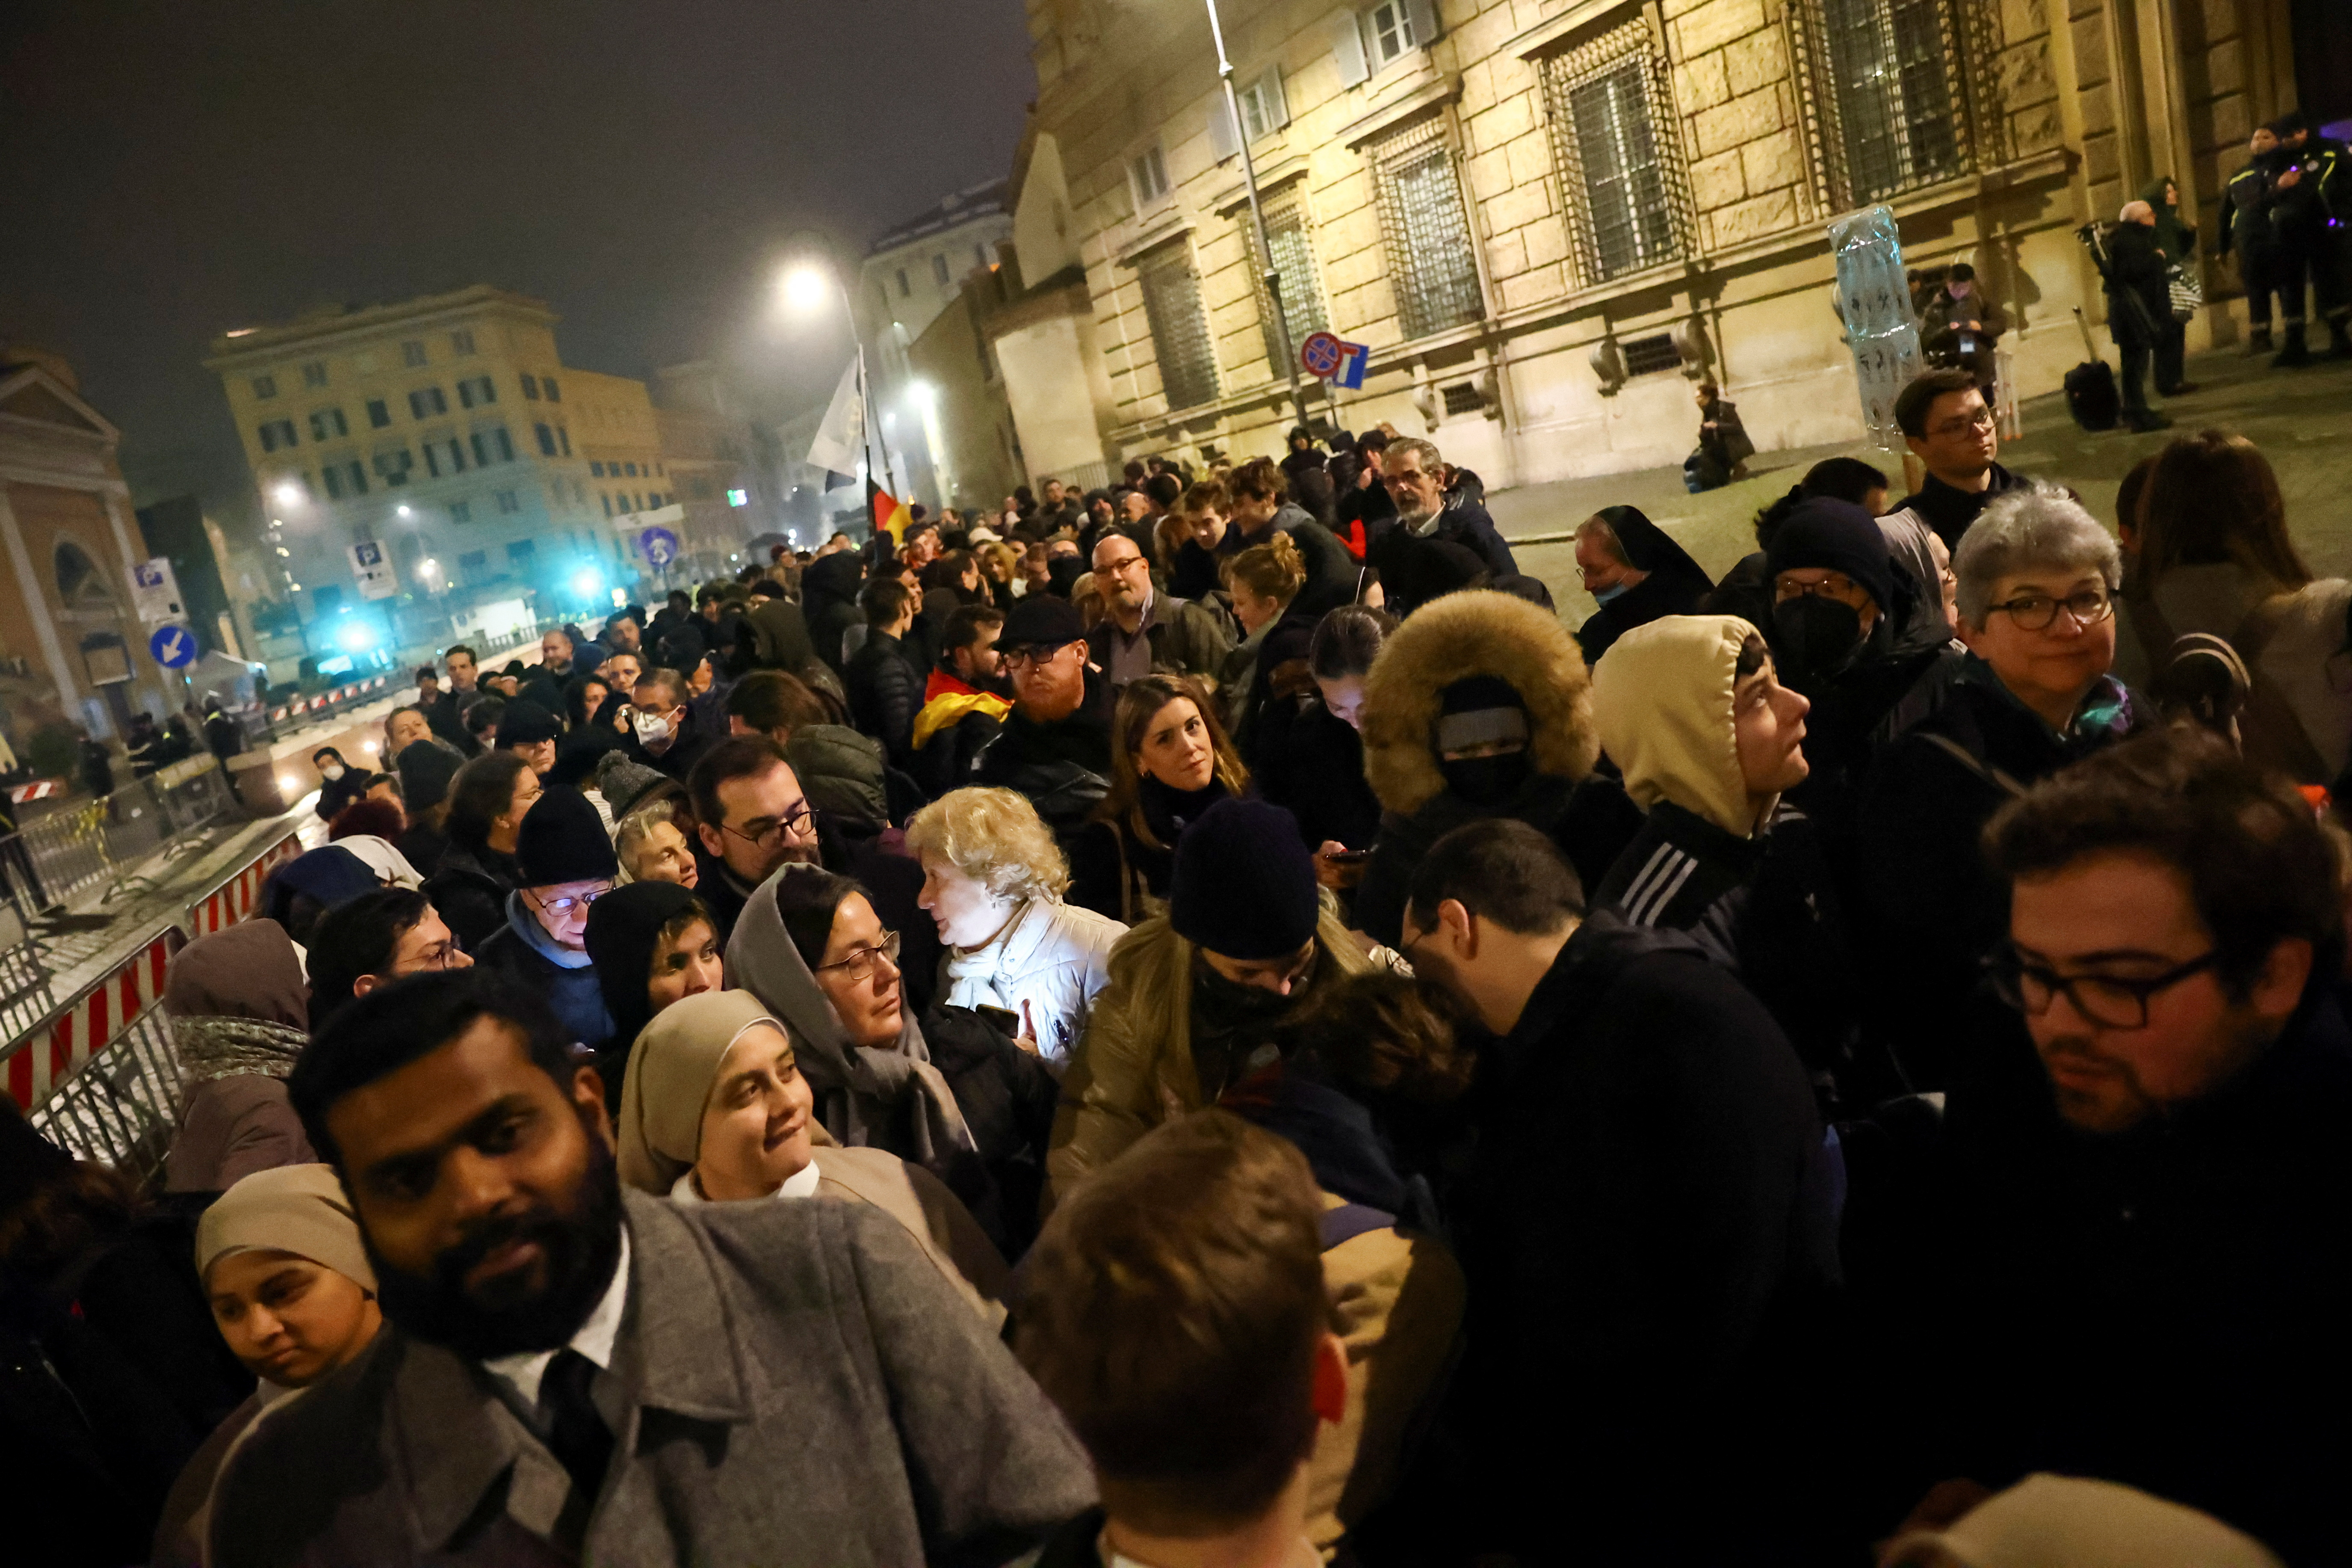 The faithful wait to enter St. Peter's Square.  (REUTERS/Kai Pfaffenbach)